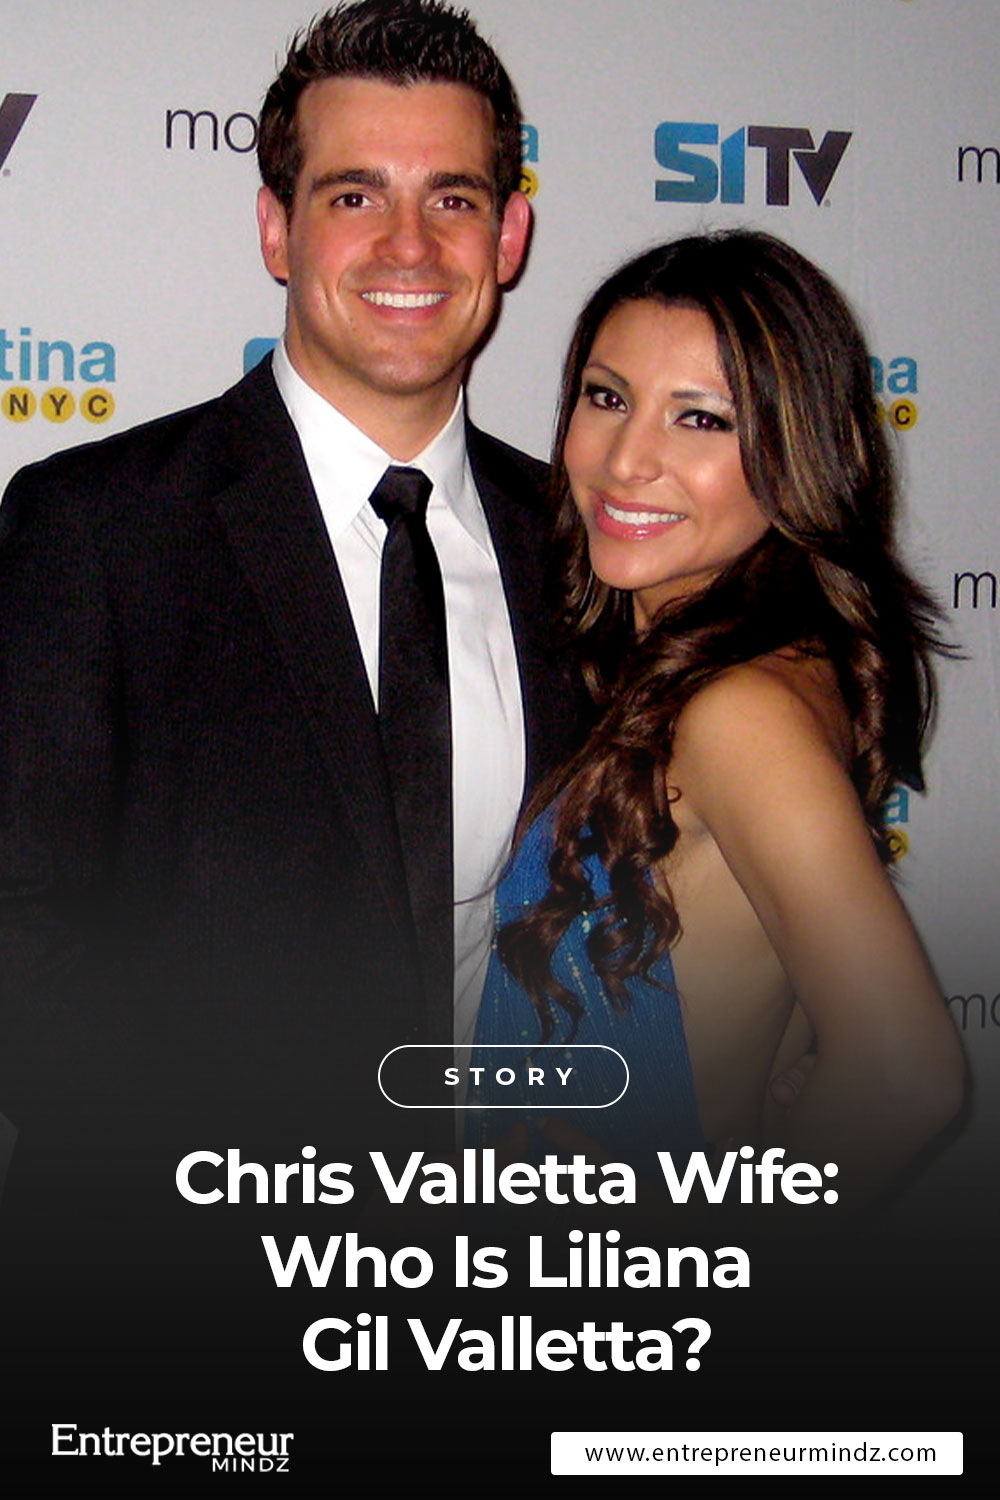 Chris Valletta Wife Who Is Liliana Gil Valletta?